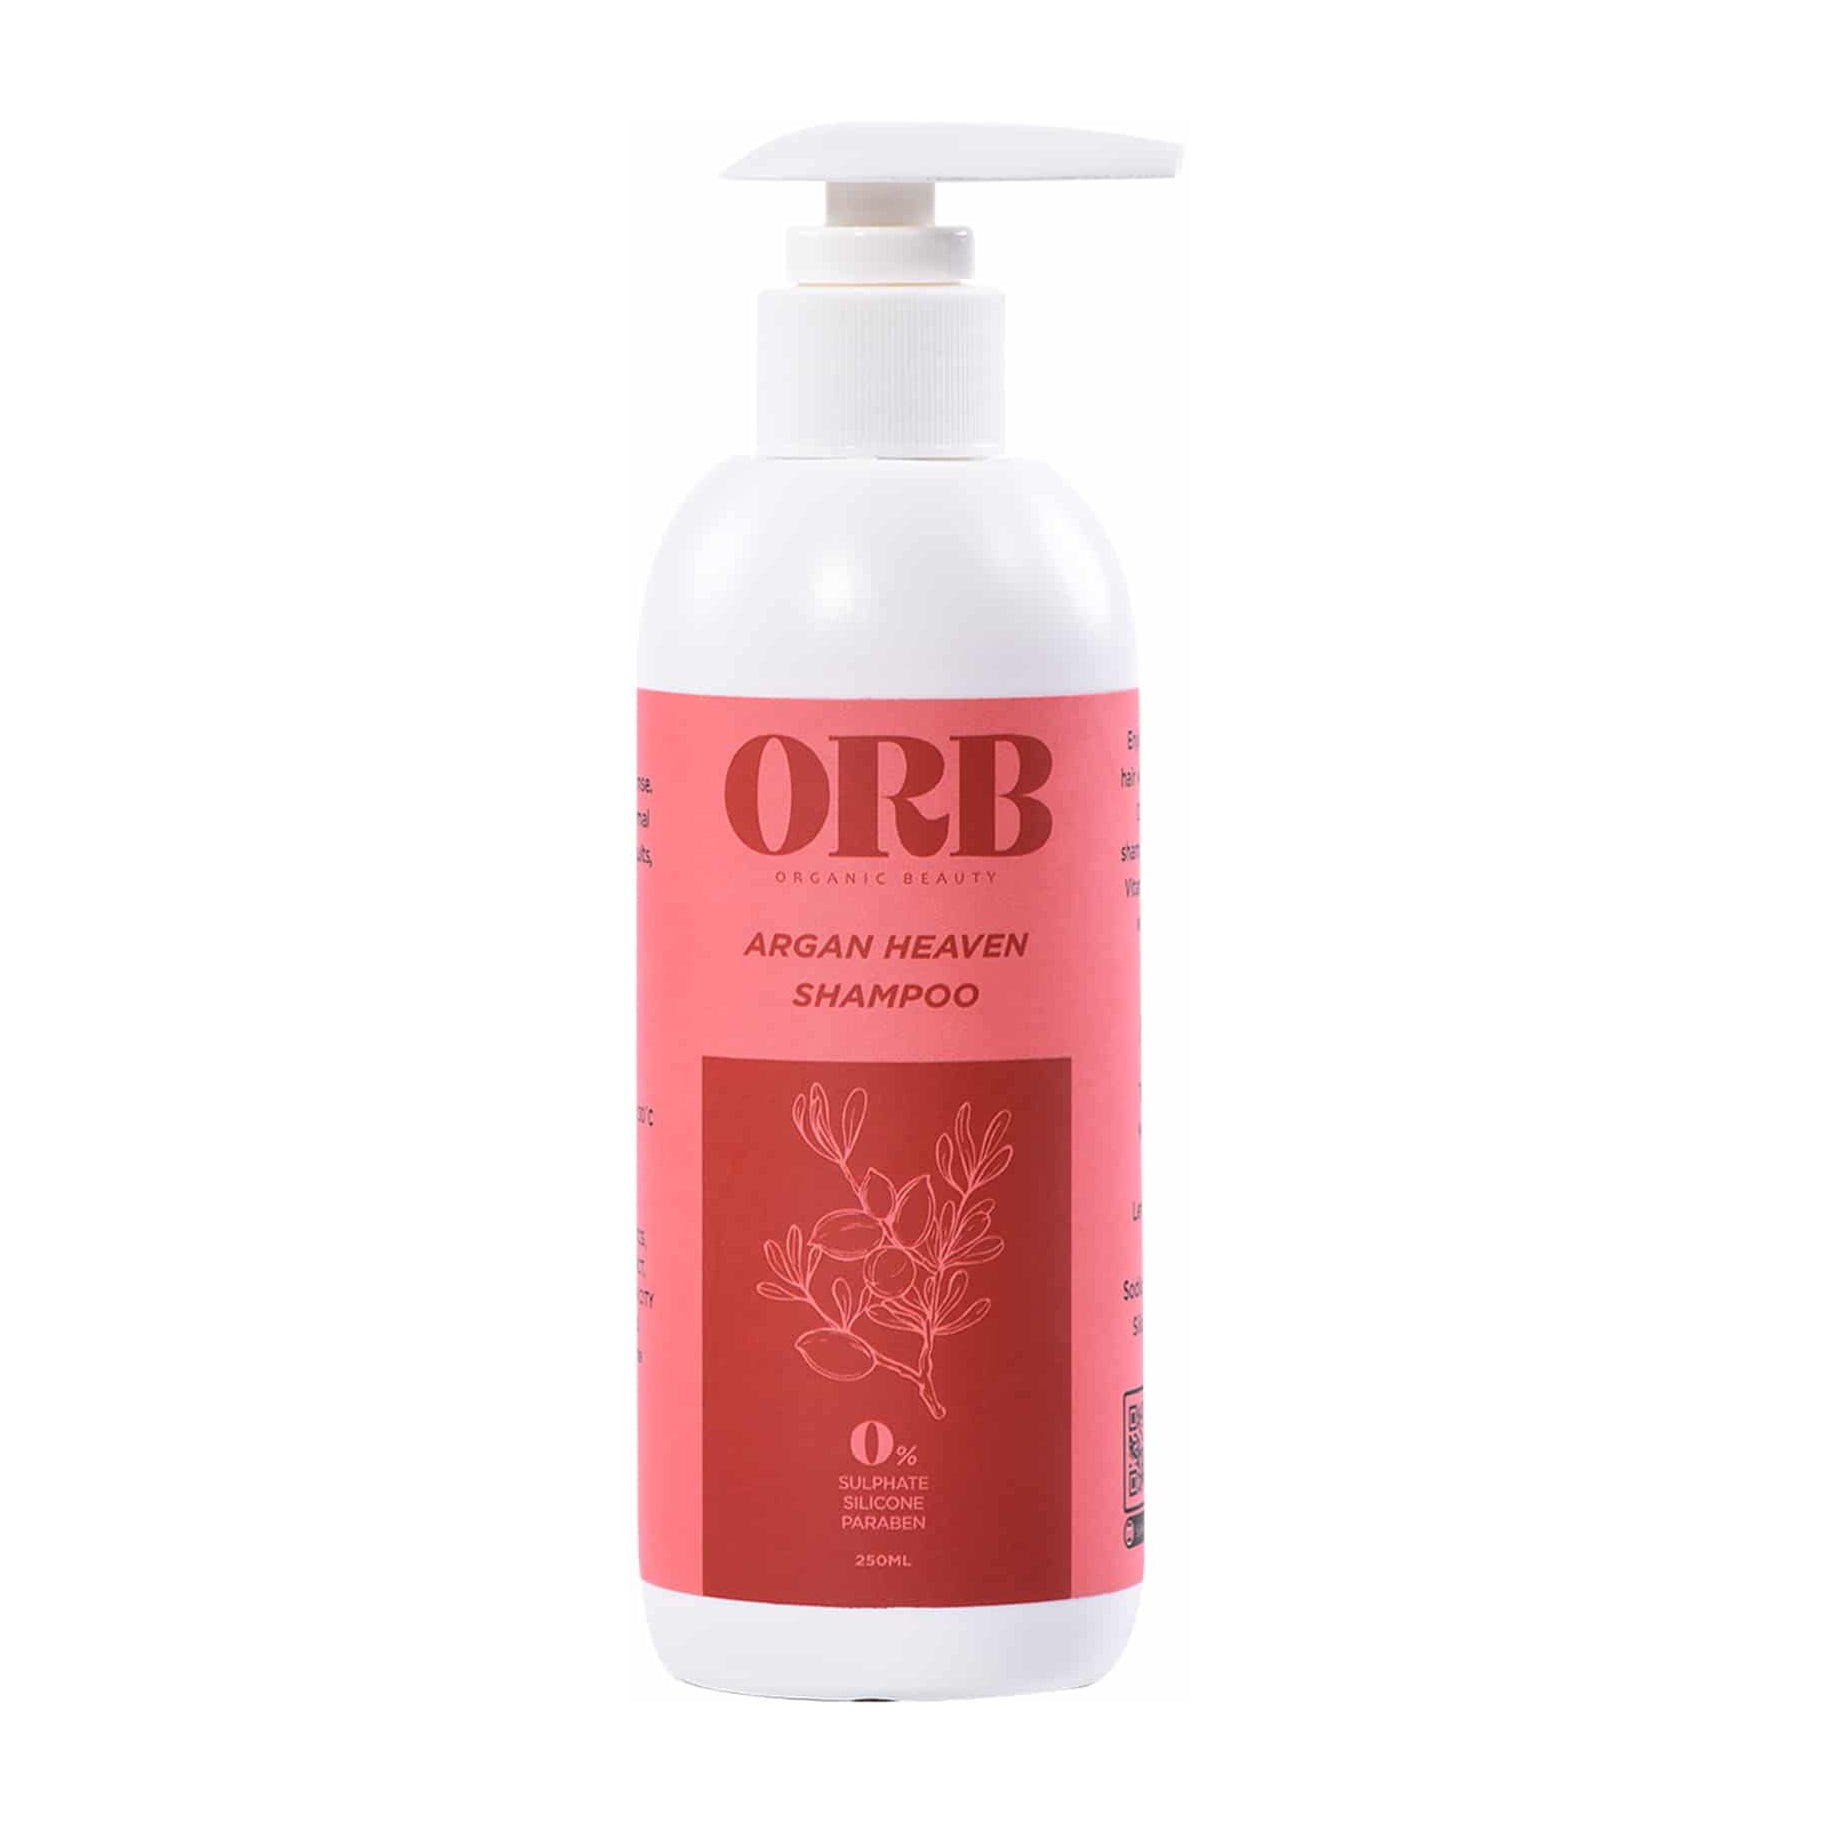 ORB Argan Heaven Shampoo - 250ml - Bloom Pharmacy